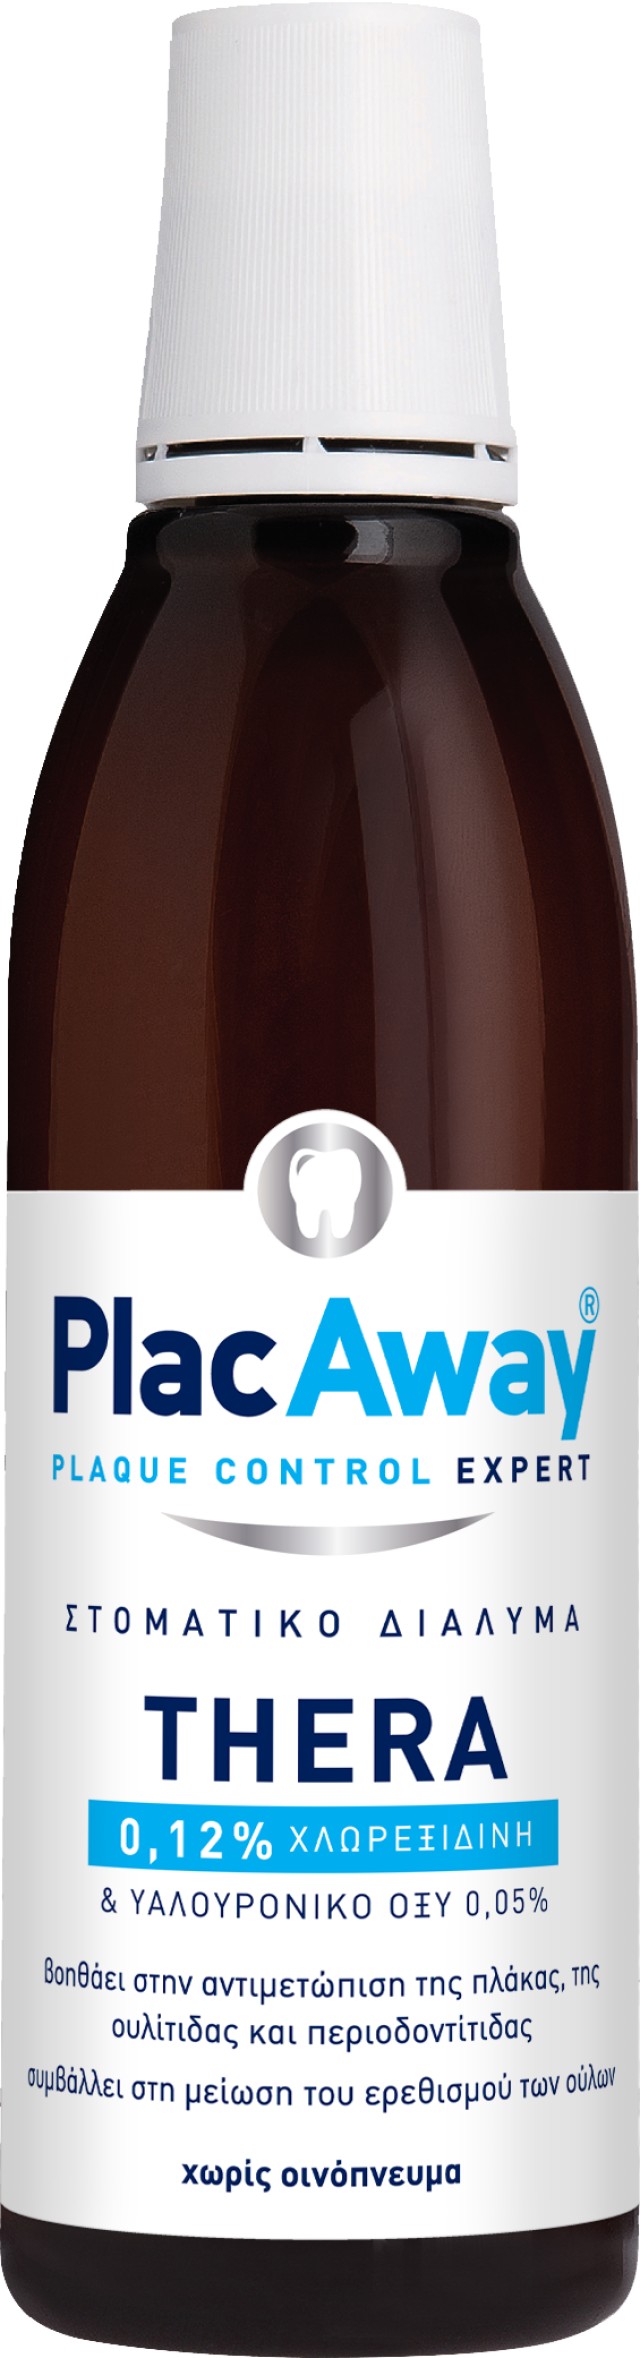 Plac Away Thera Plus Στοματικό Διάλυμα με 0.12% Χλωρεξιδίνη 250ml